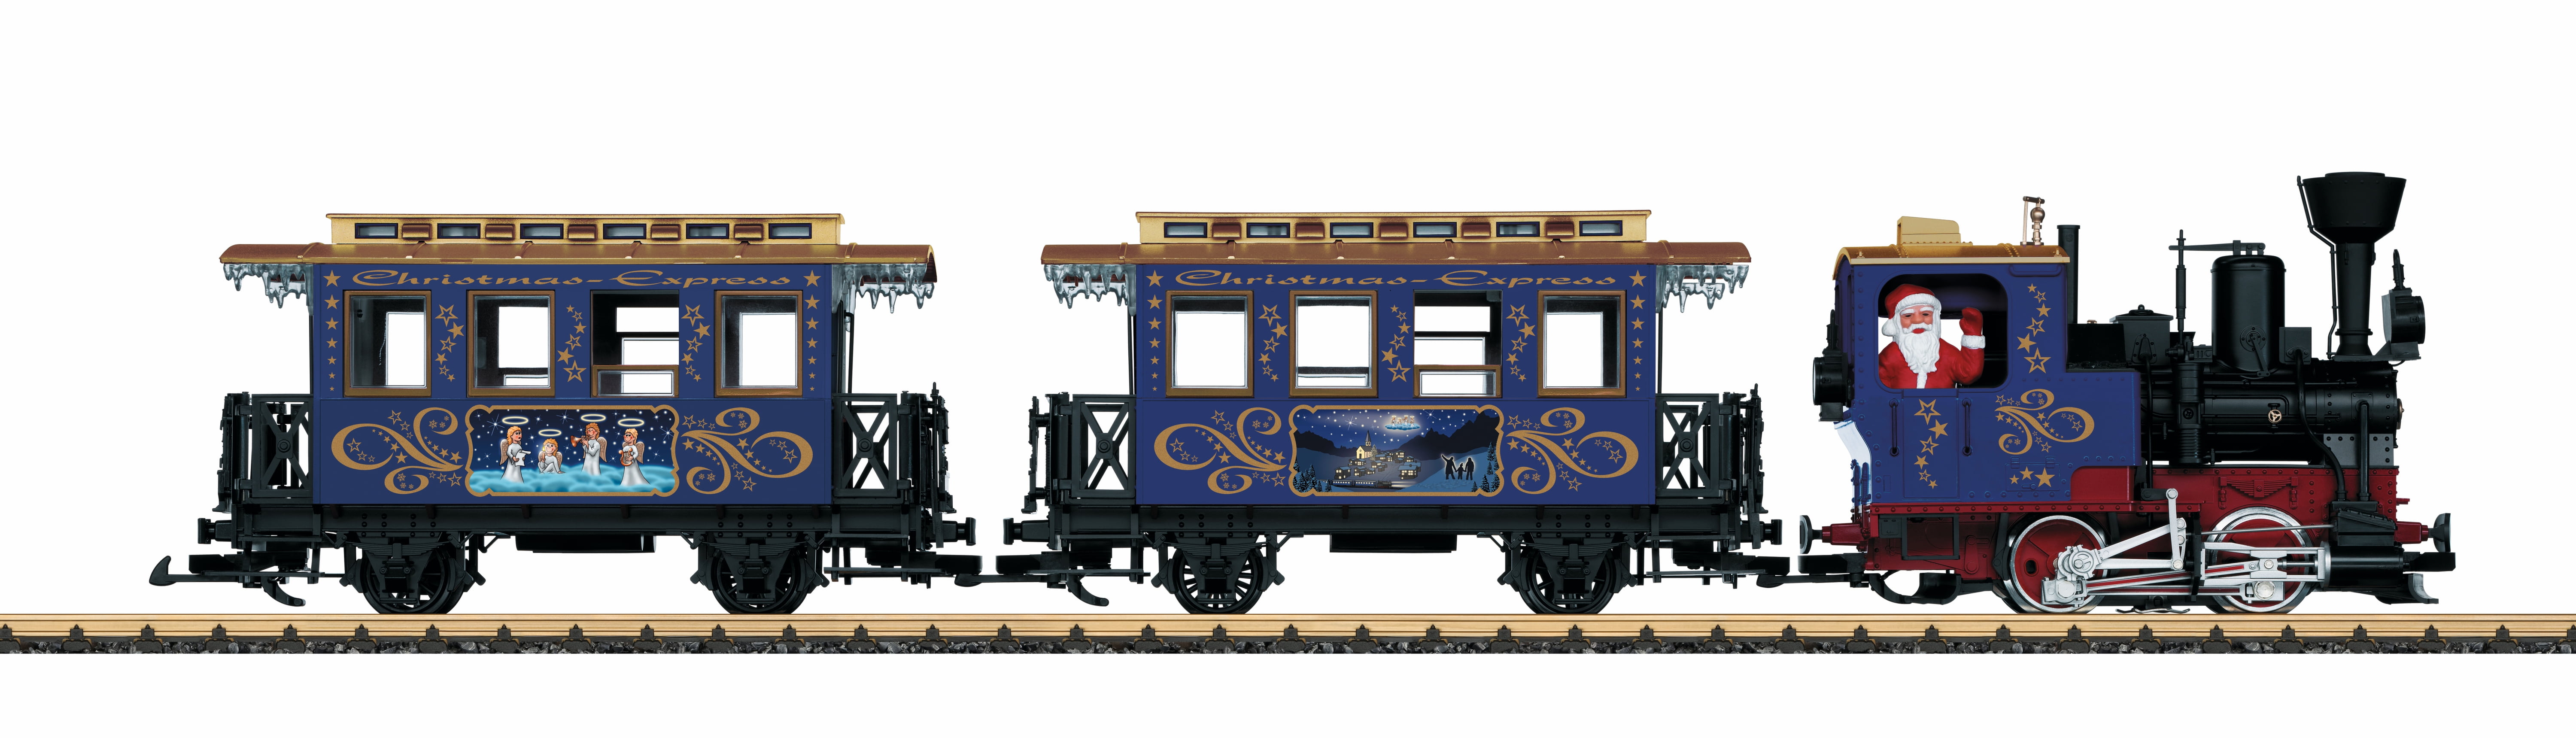 LGB Blue Christmas Train G Scale 72305 Starter Set for sale online 